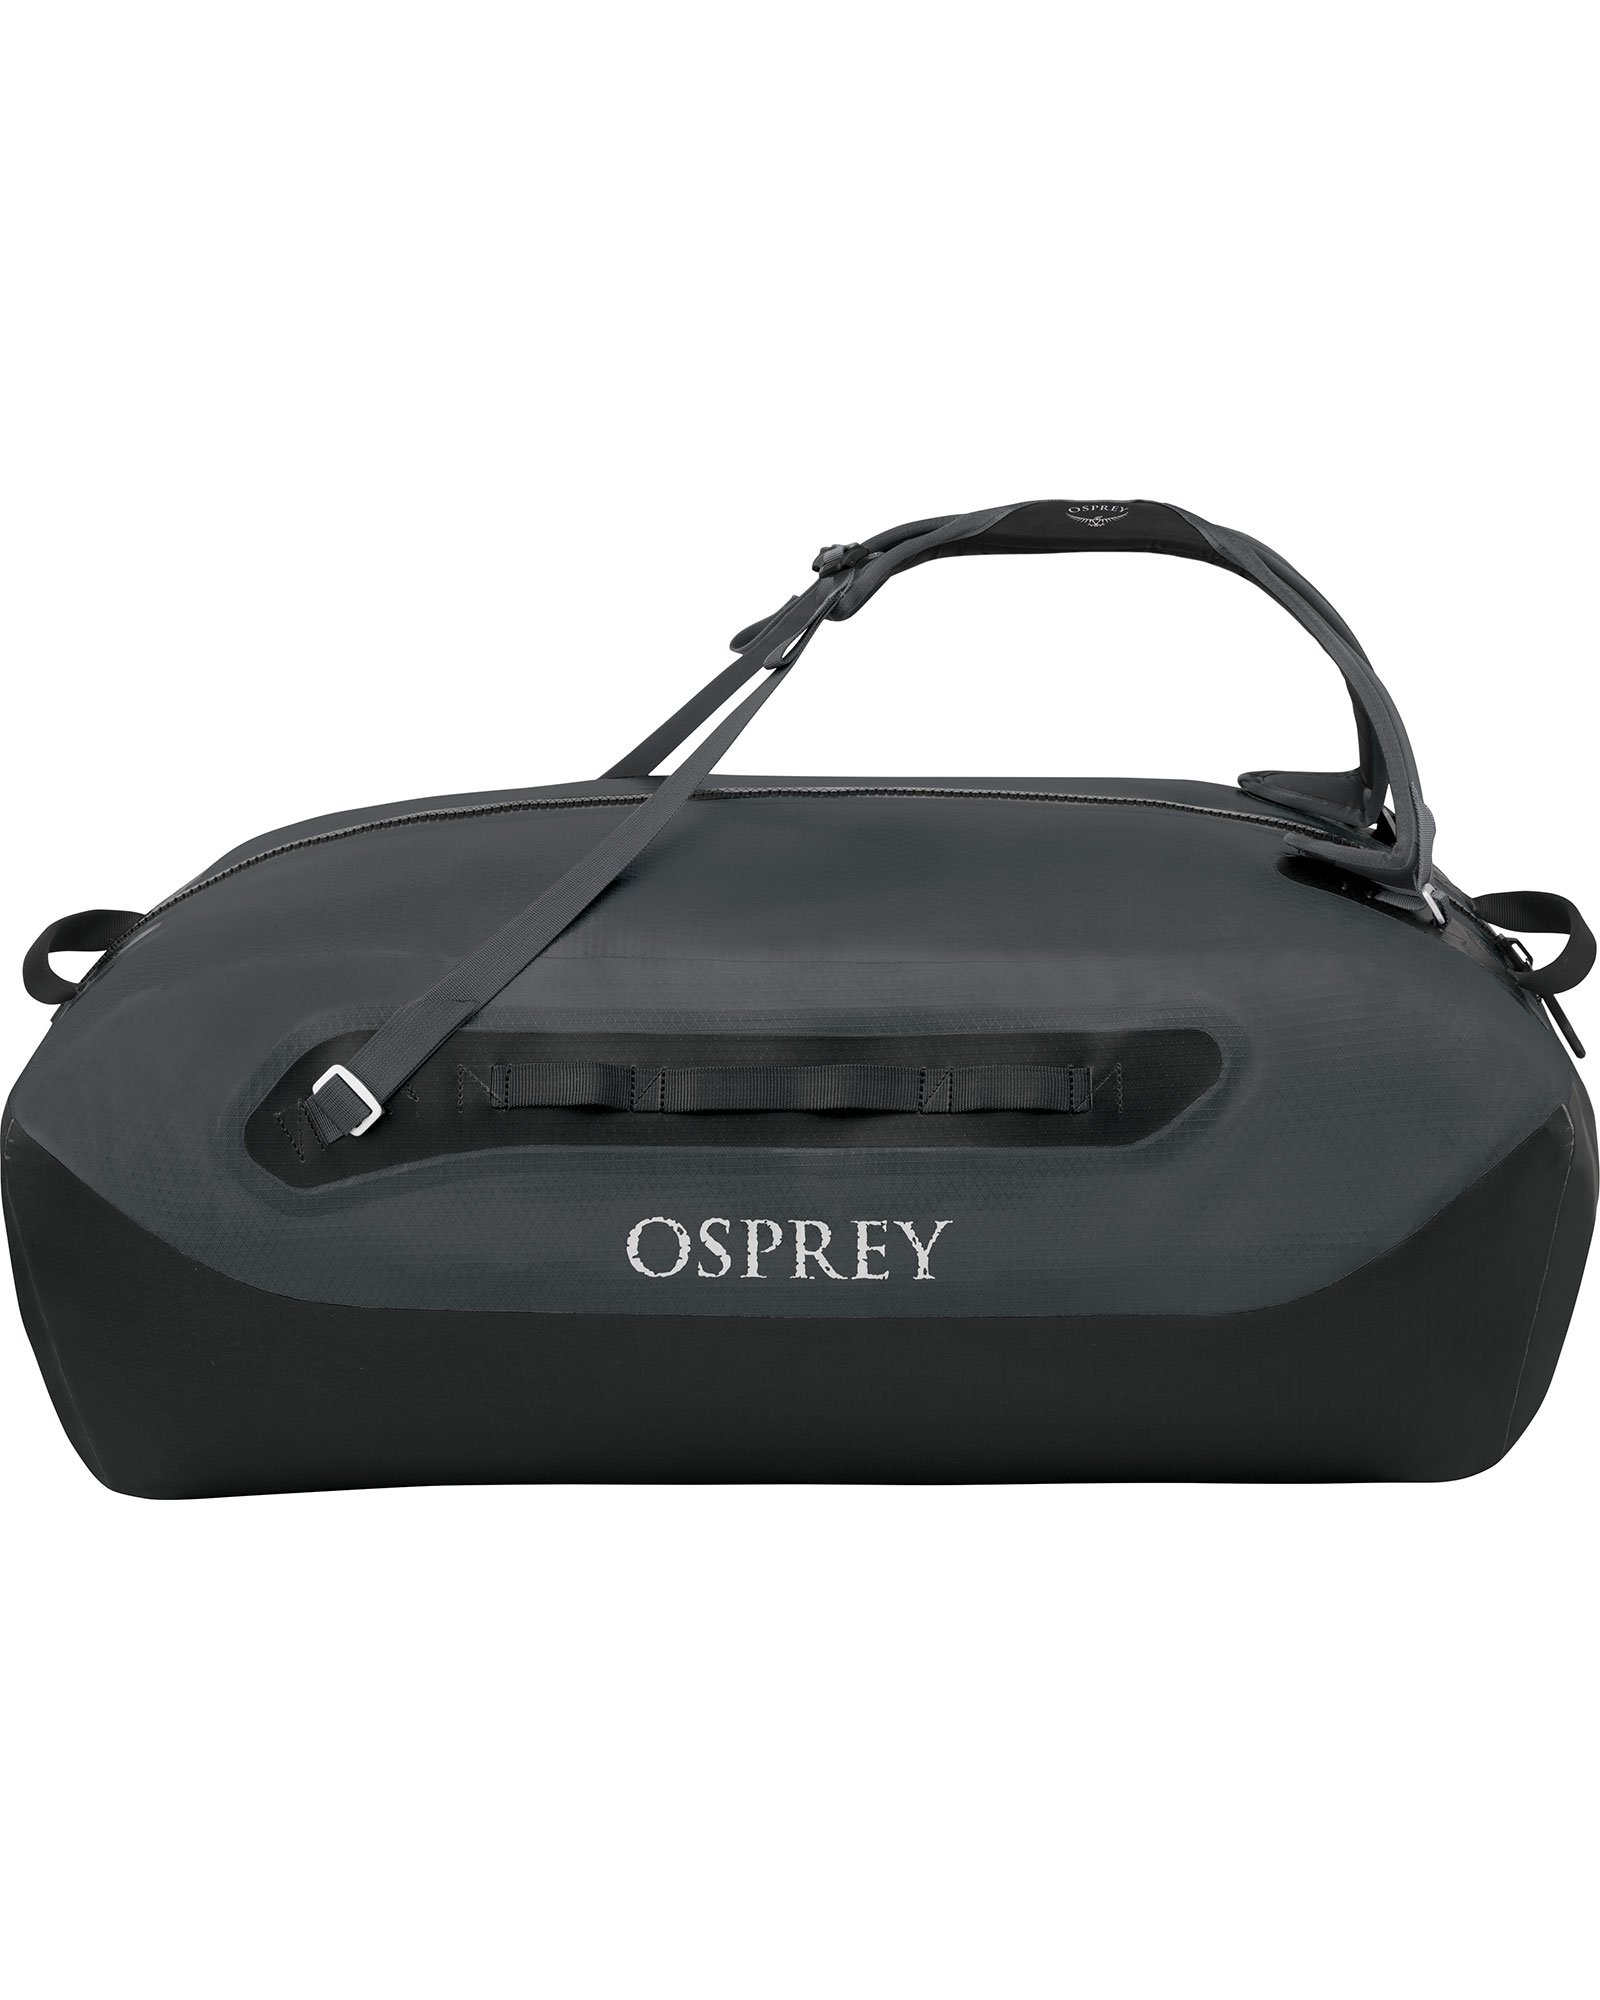 Osprey Transporter 100 Waterproof Duffel - Tunnel Vision Grey